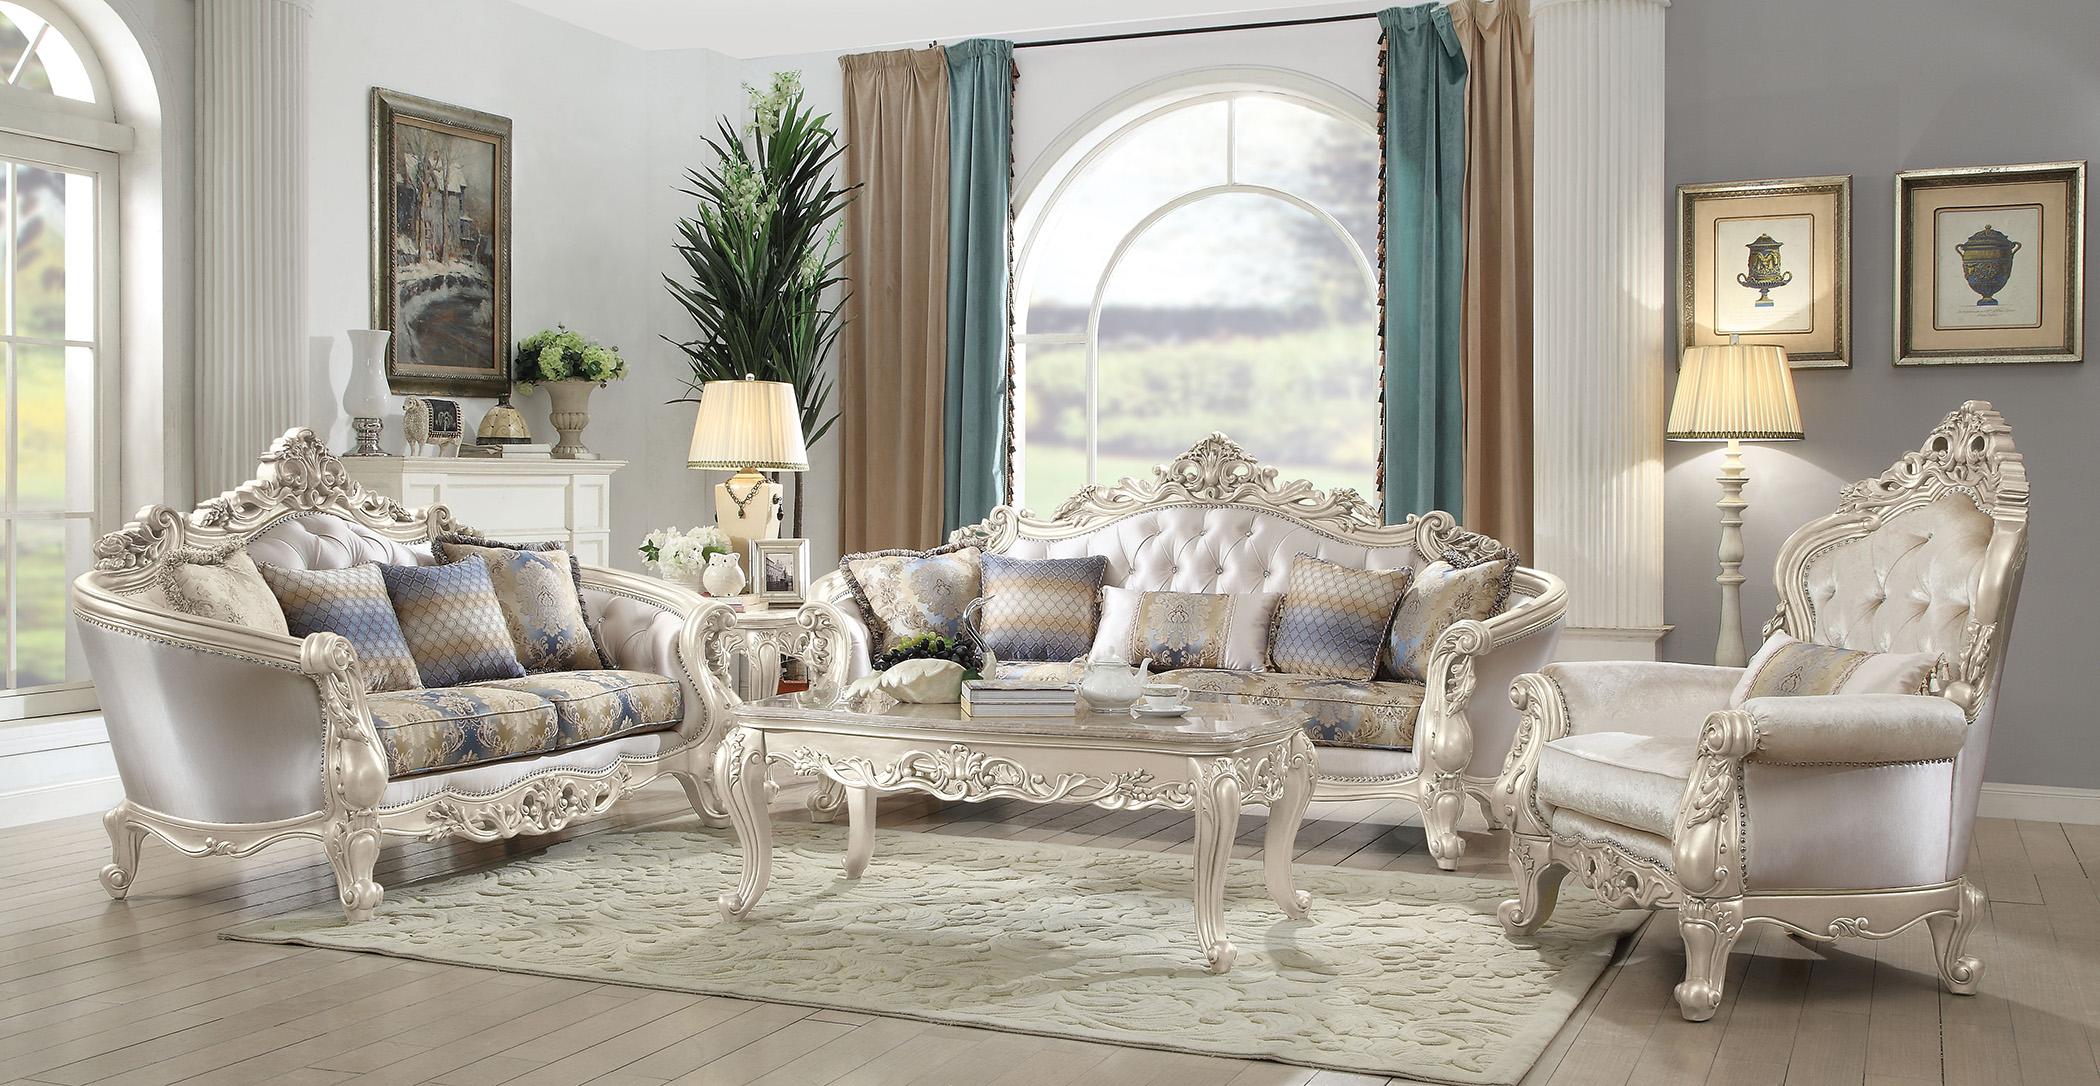 

        
Acme Furniture Gorsedd-52442 Arm Chairs Antique White/Cream Fabric 0840412173134
